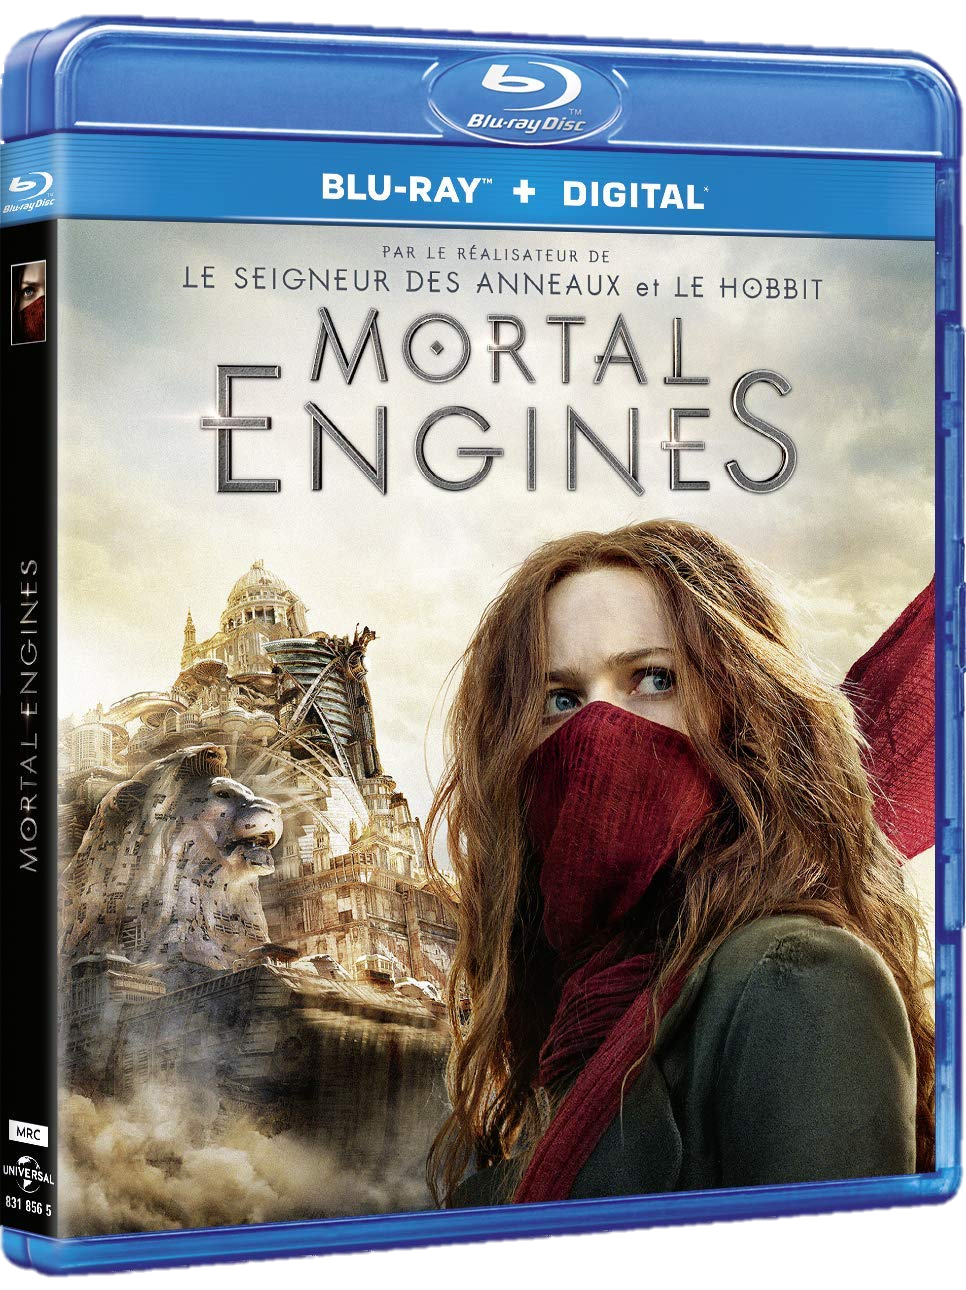 flashvideofilm - Mortal Engines " Blu-ray à la location " - Location